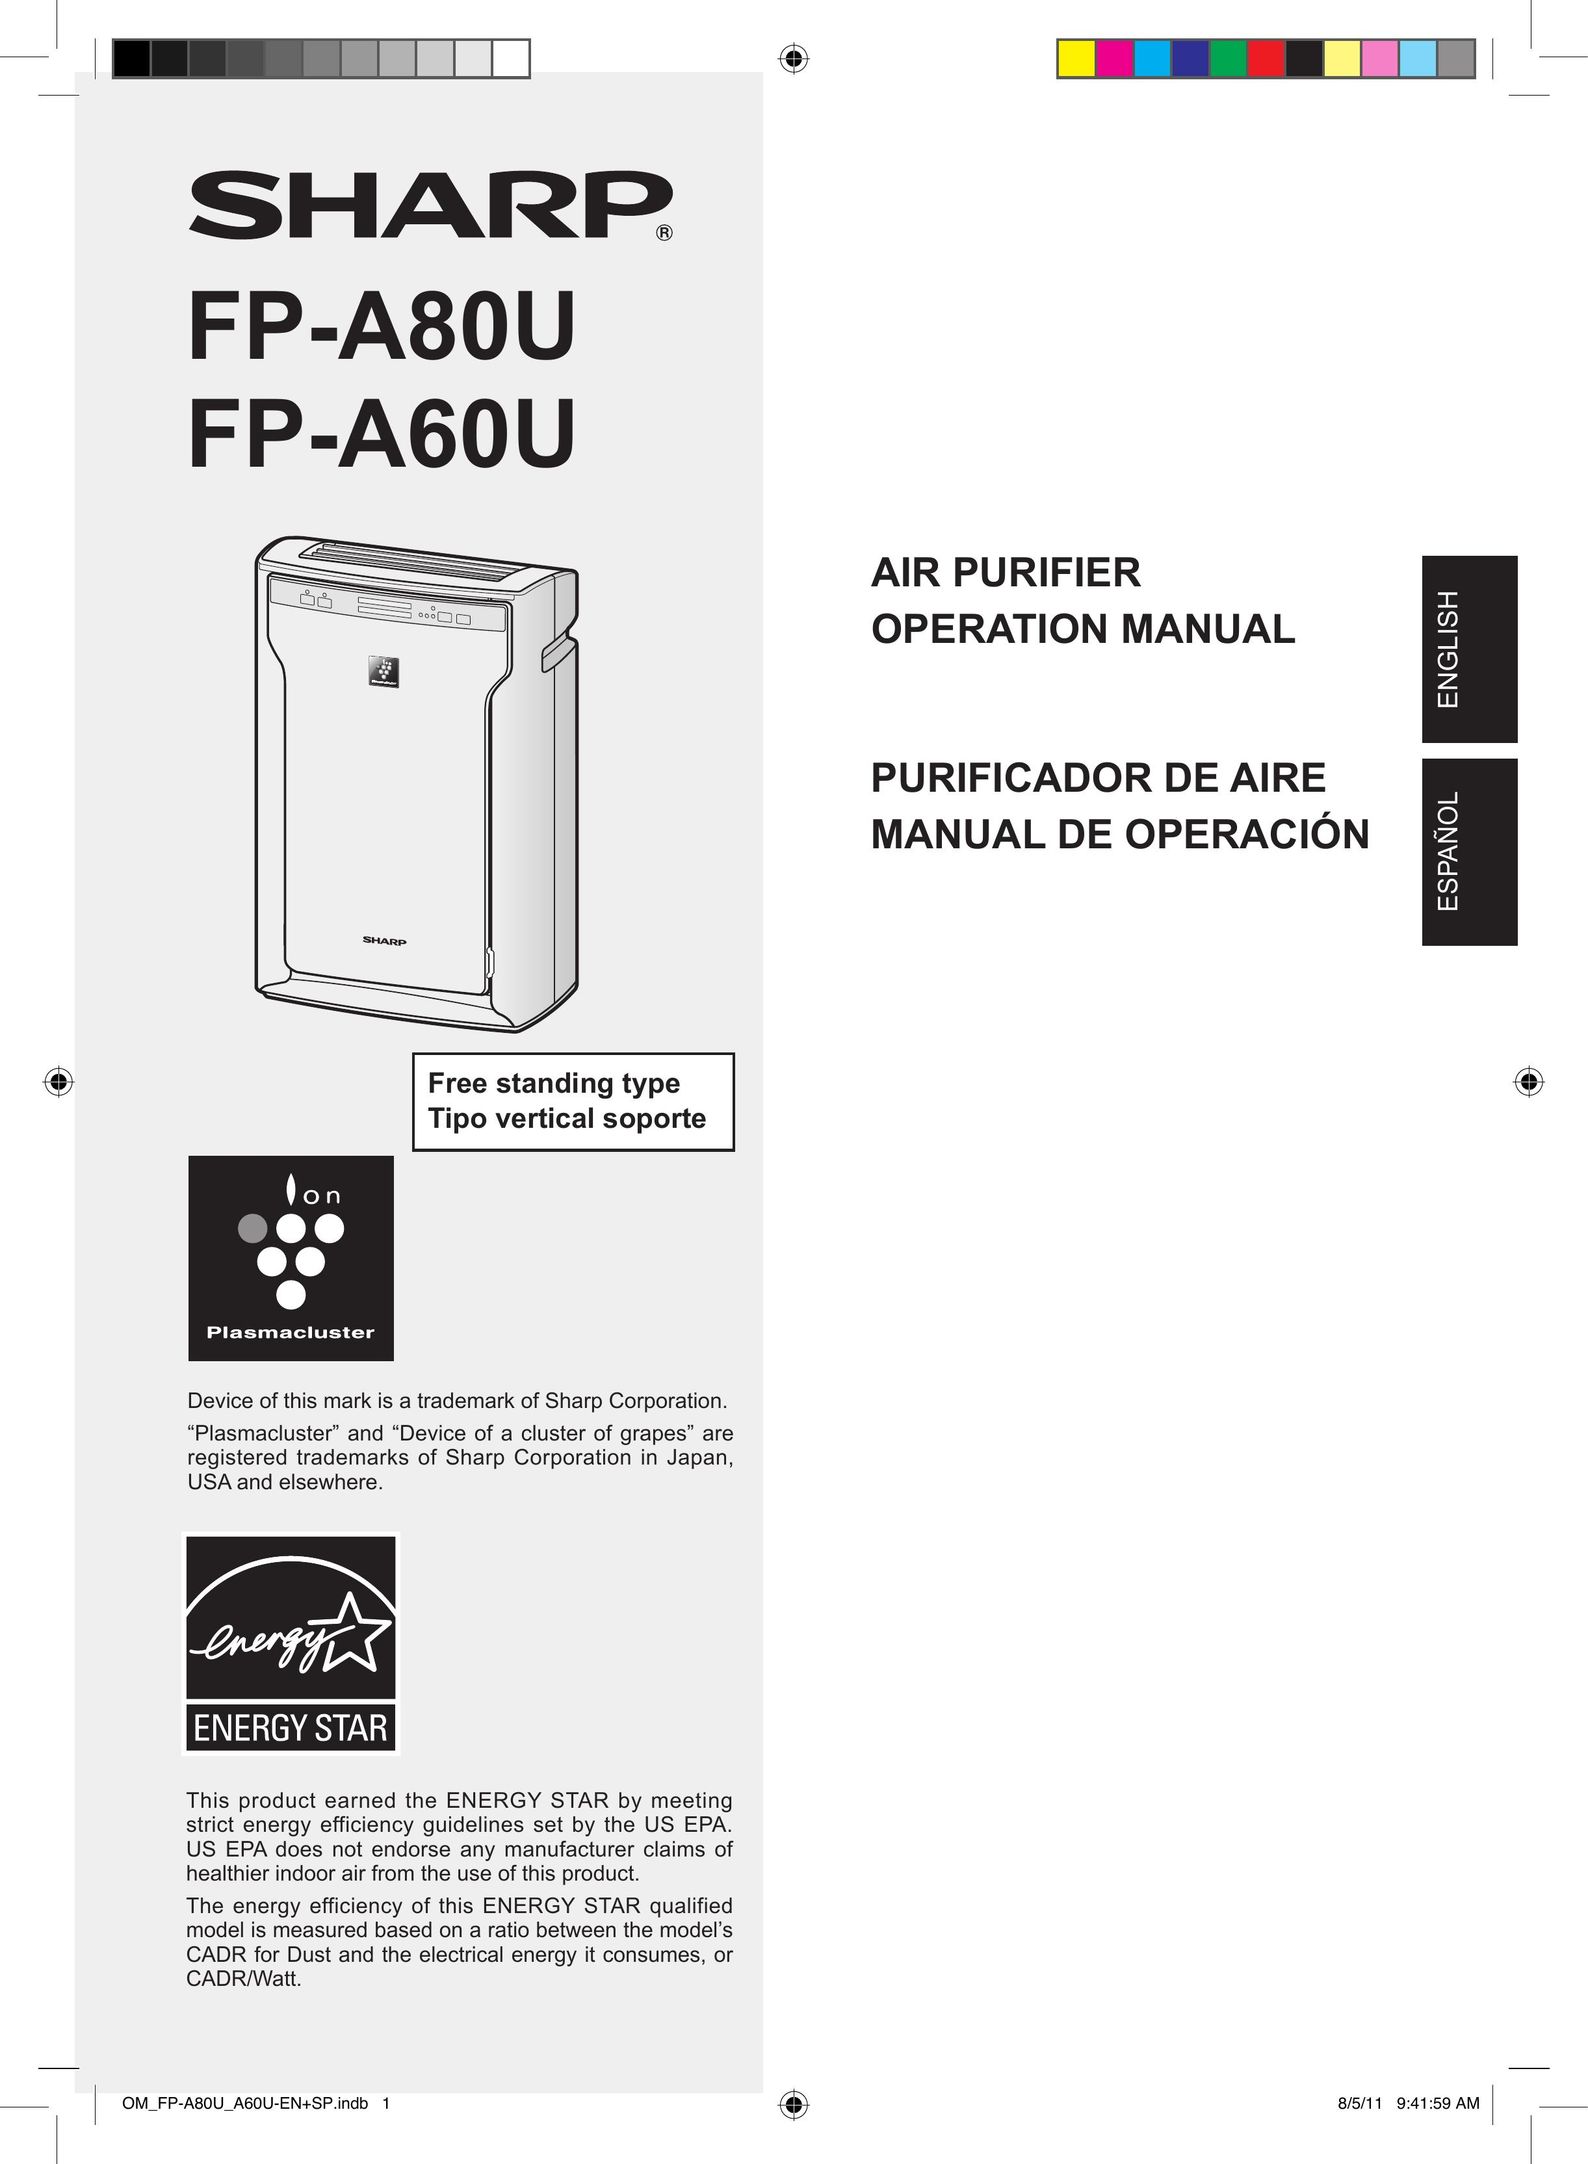 Sharp FP-A80U Air Cleaner User Manual